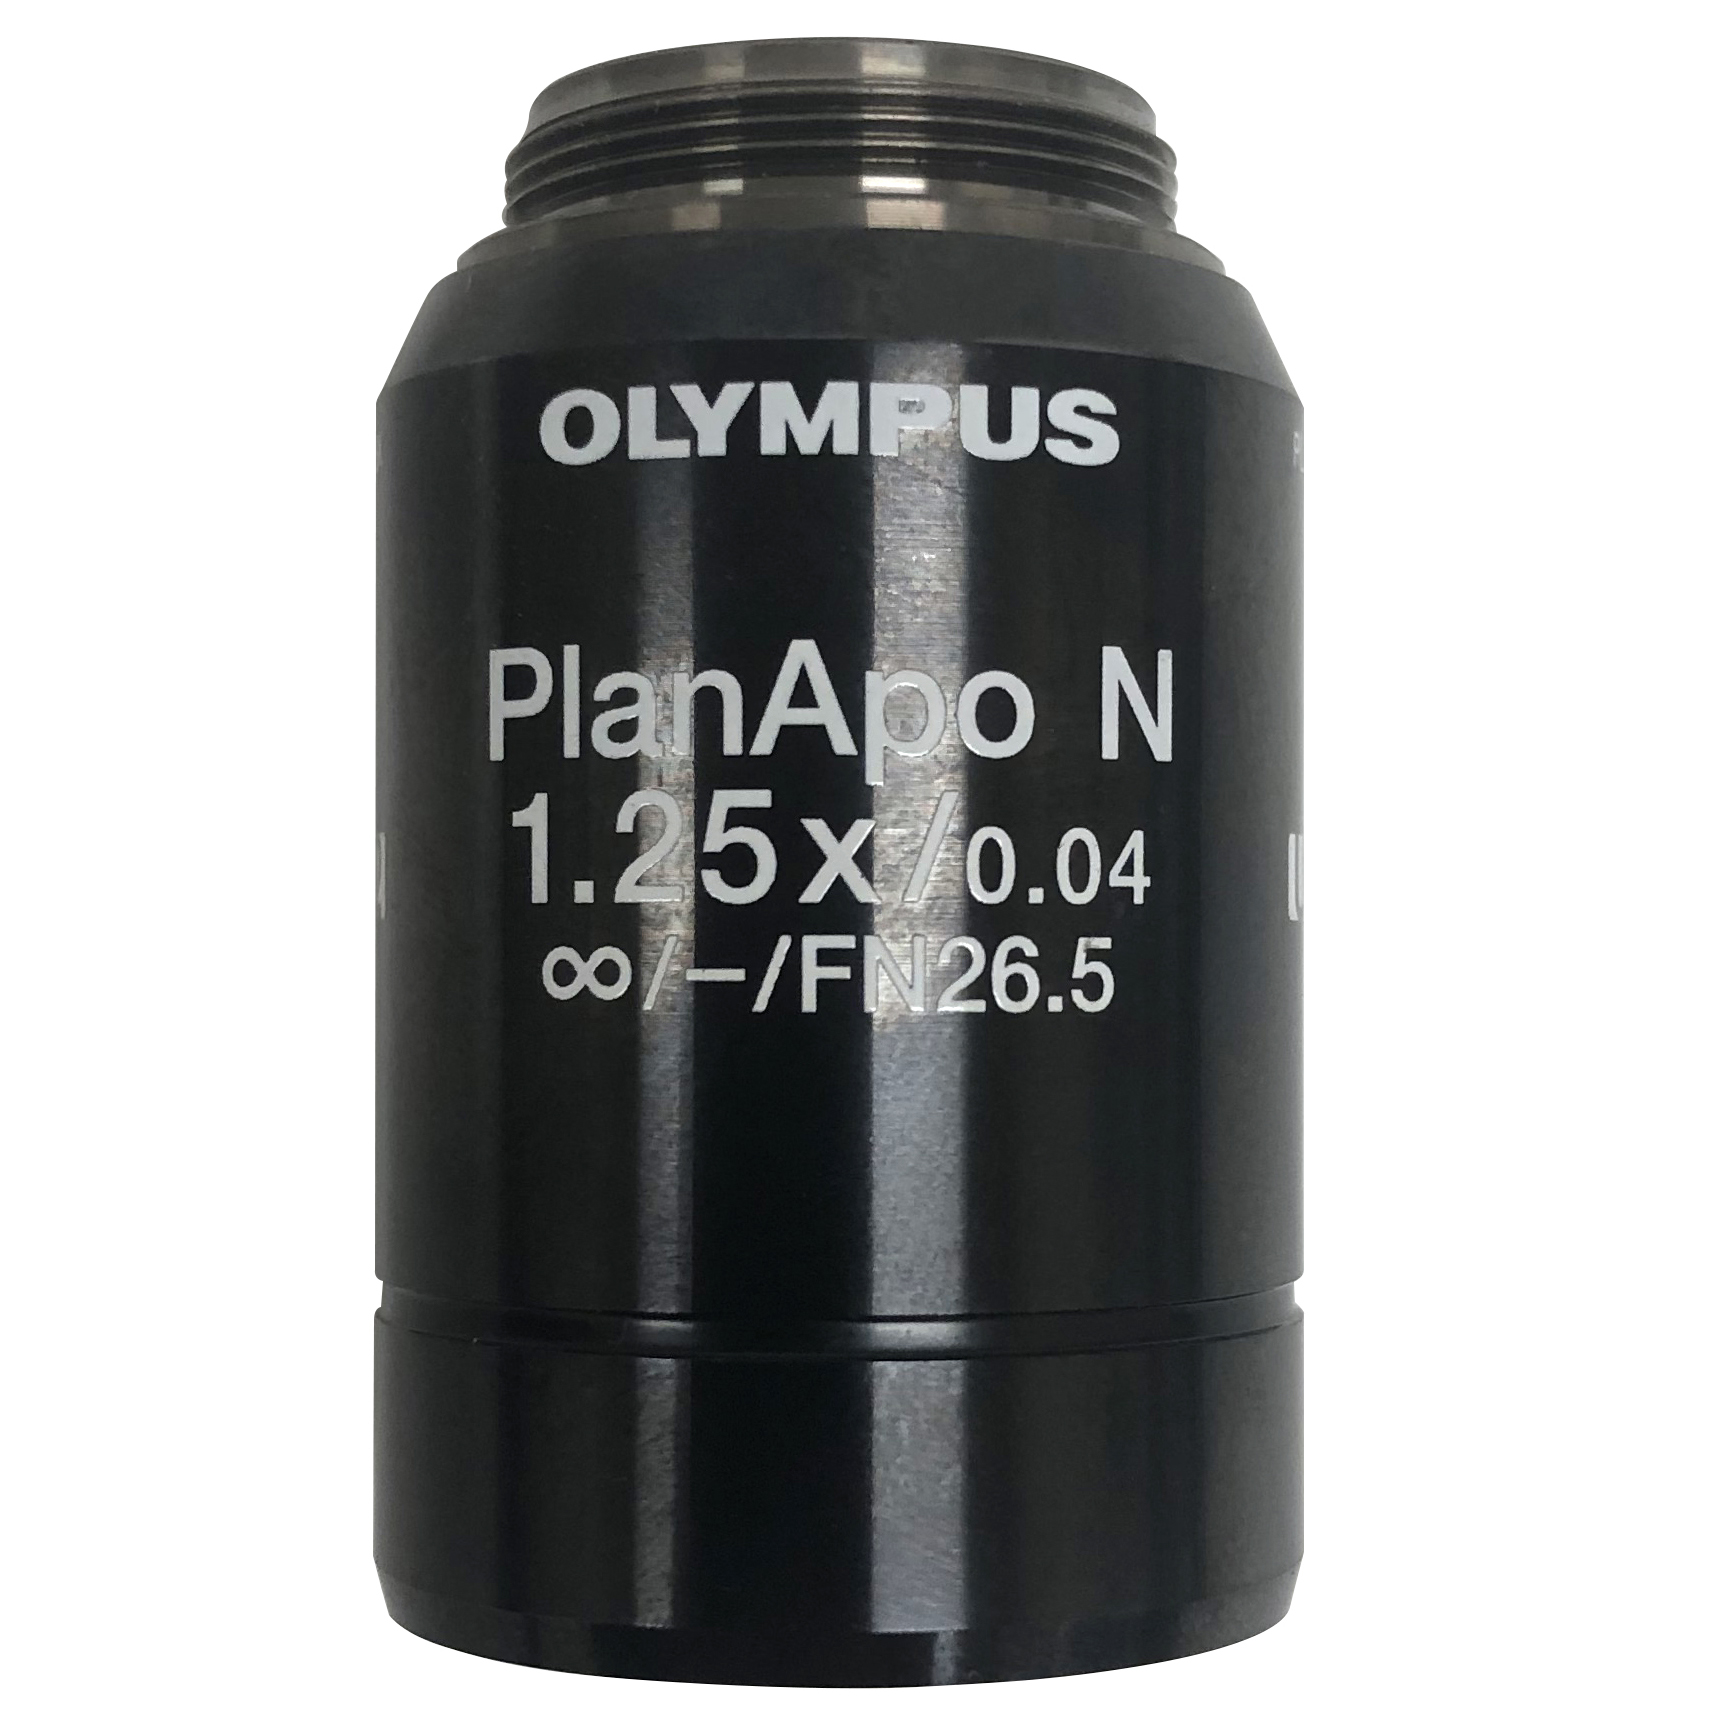 Olympus Microscope Objective PlanApo N 1.25x Hero